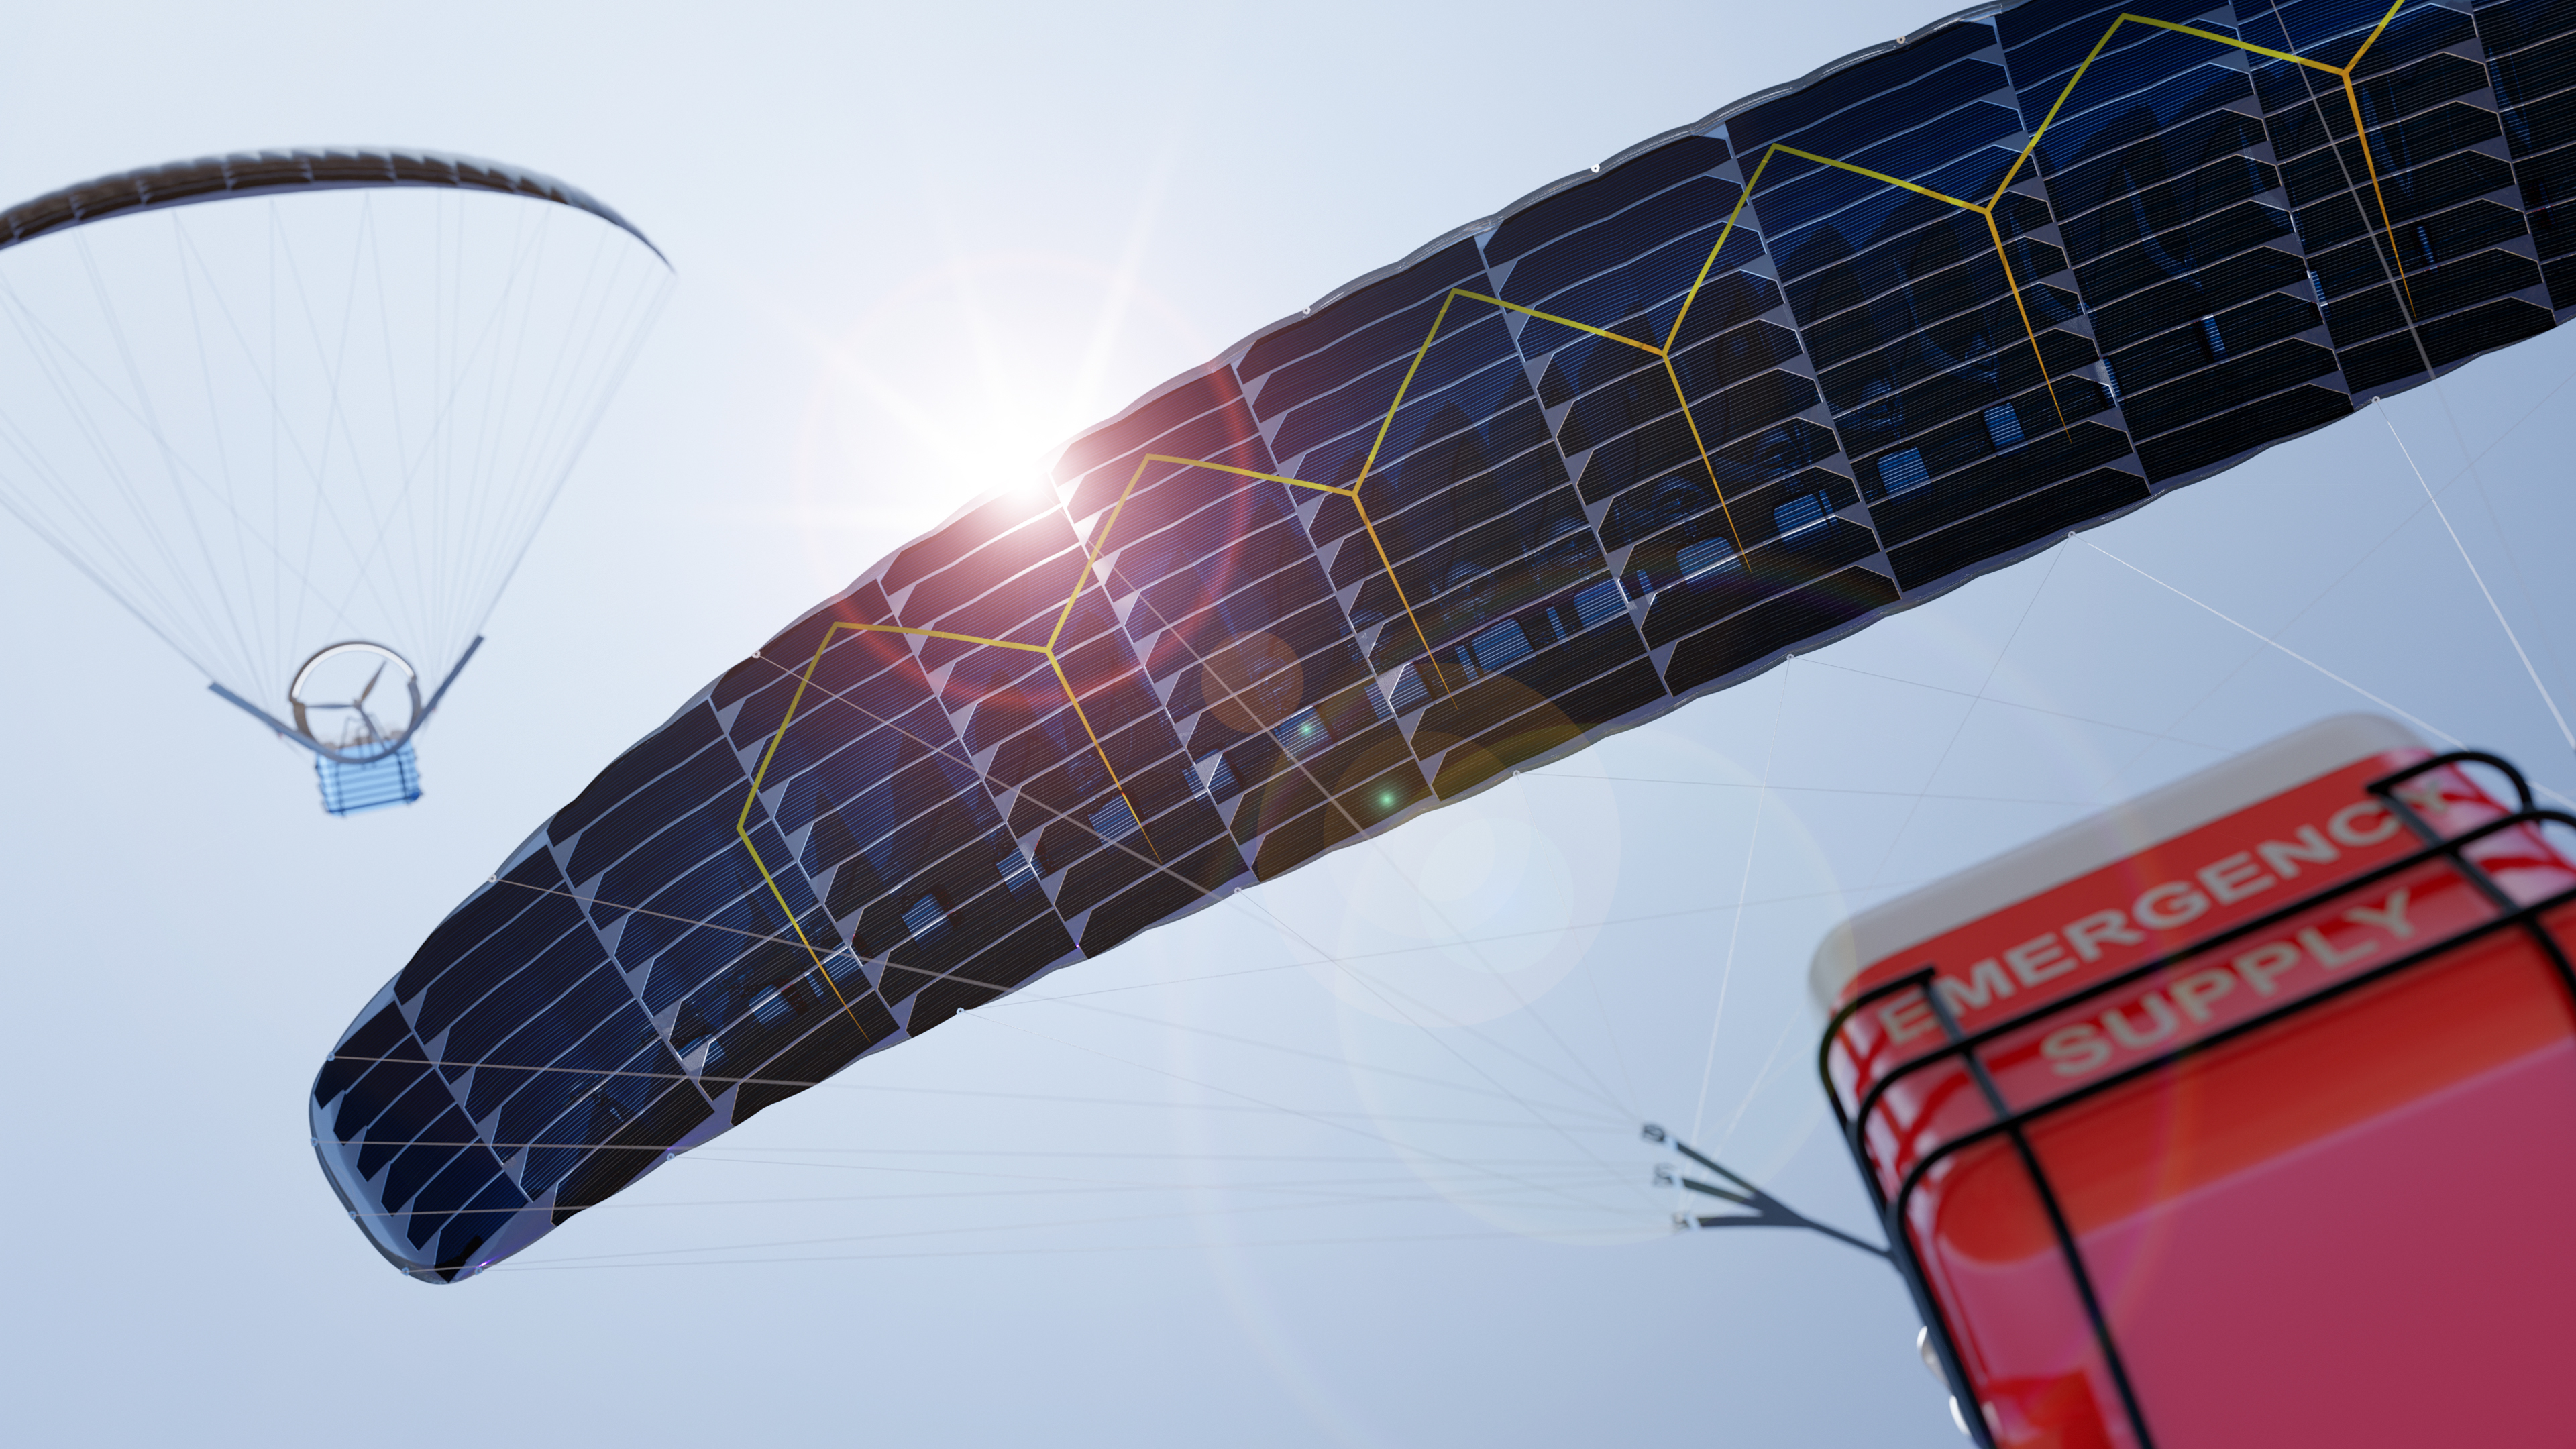 SHARP COMPOUND SOLAR MODULE FOR FUTURE MOBILITY